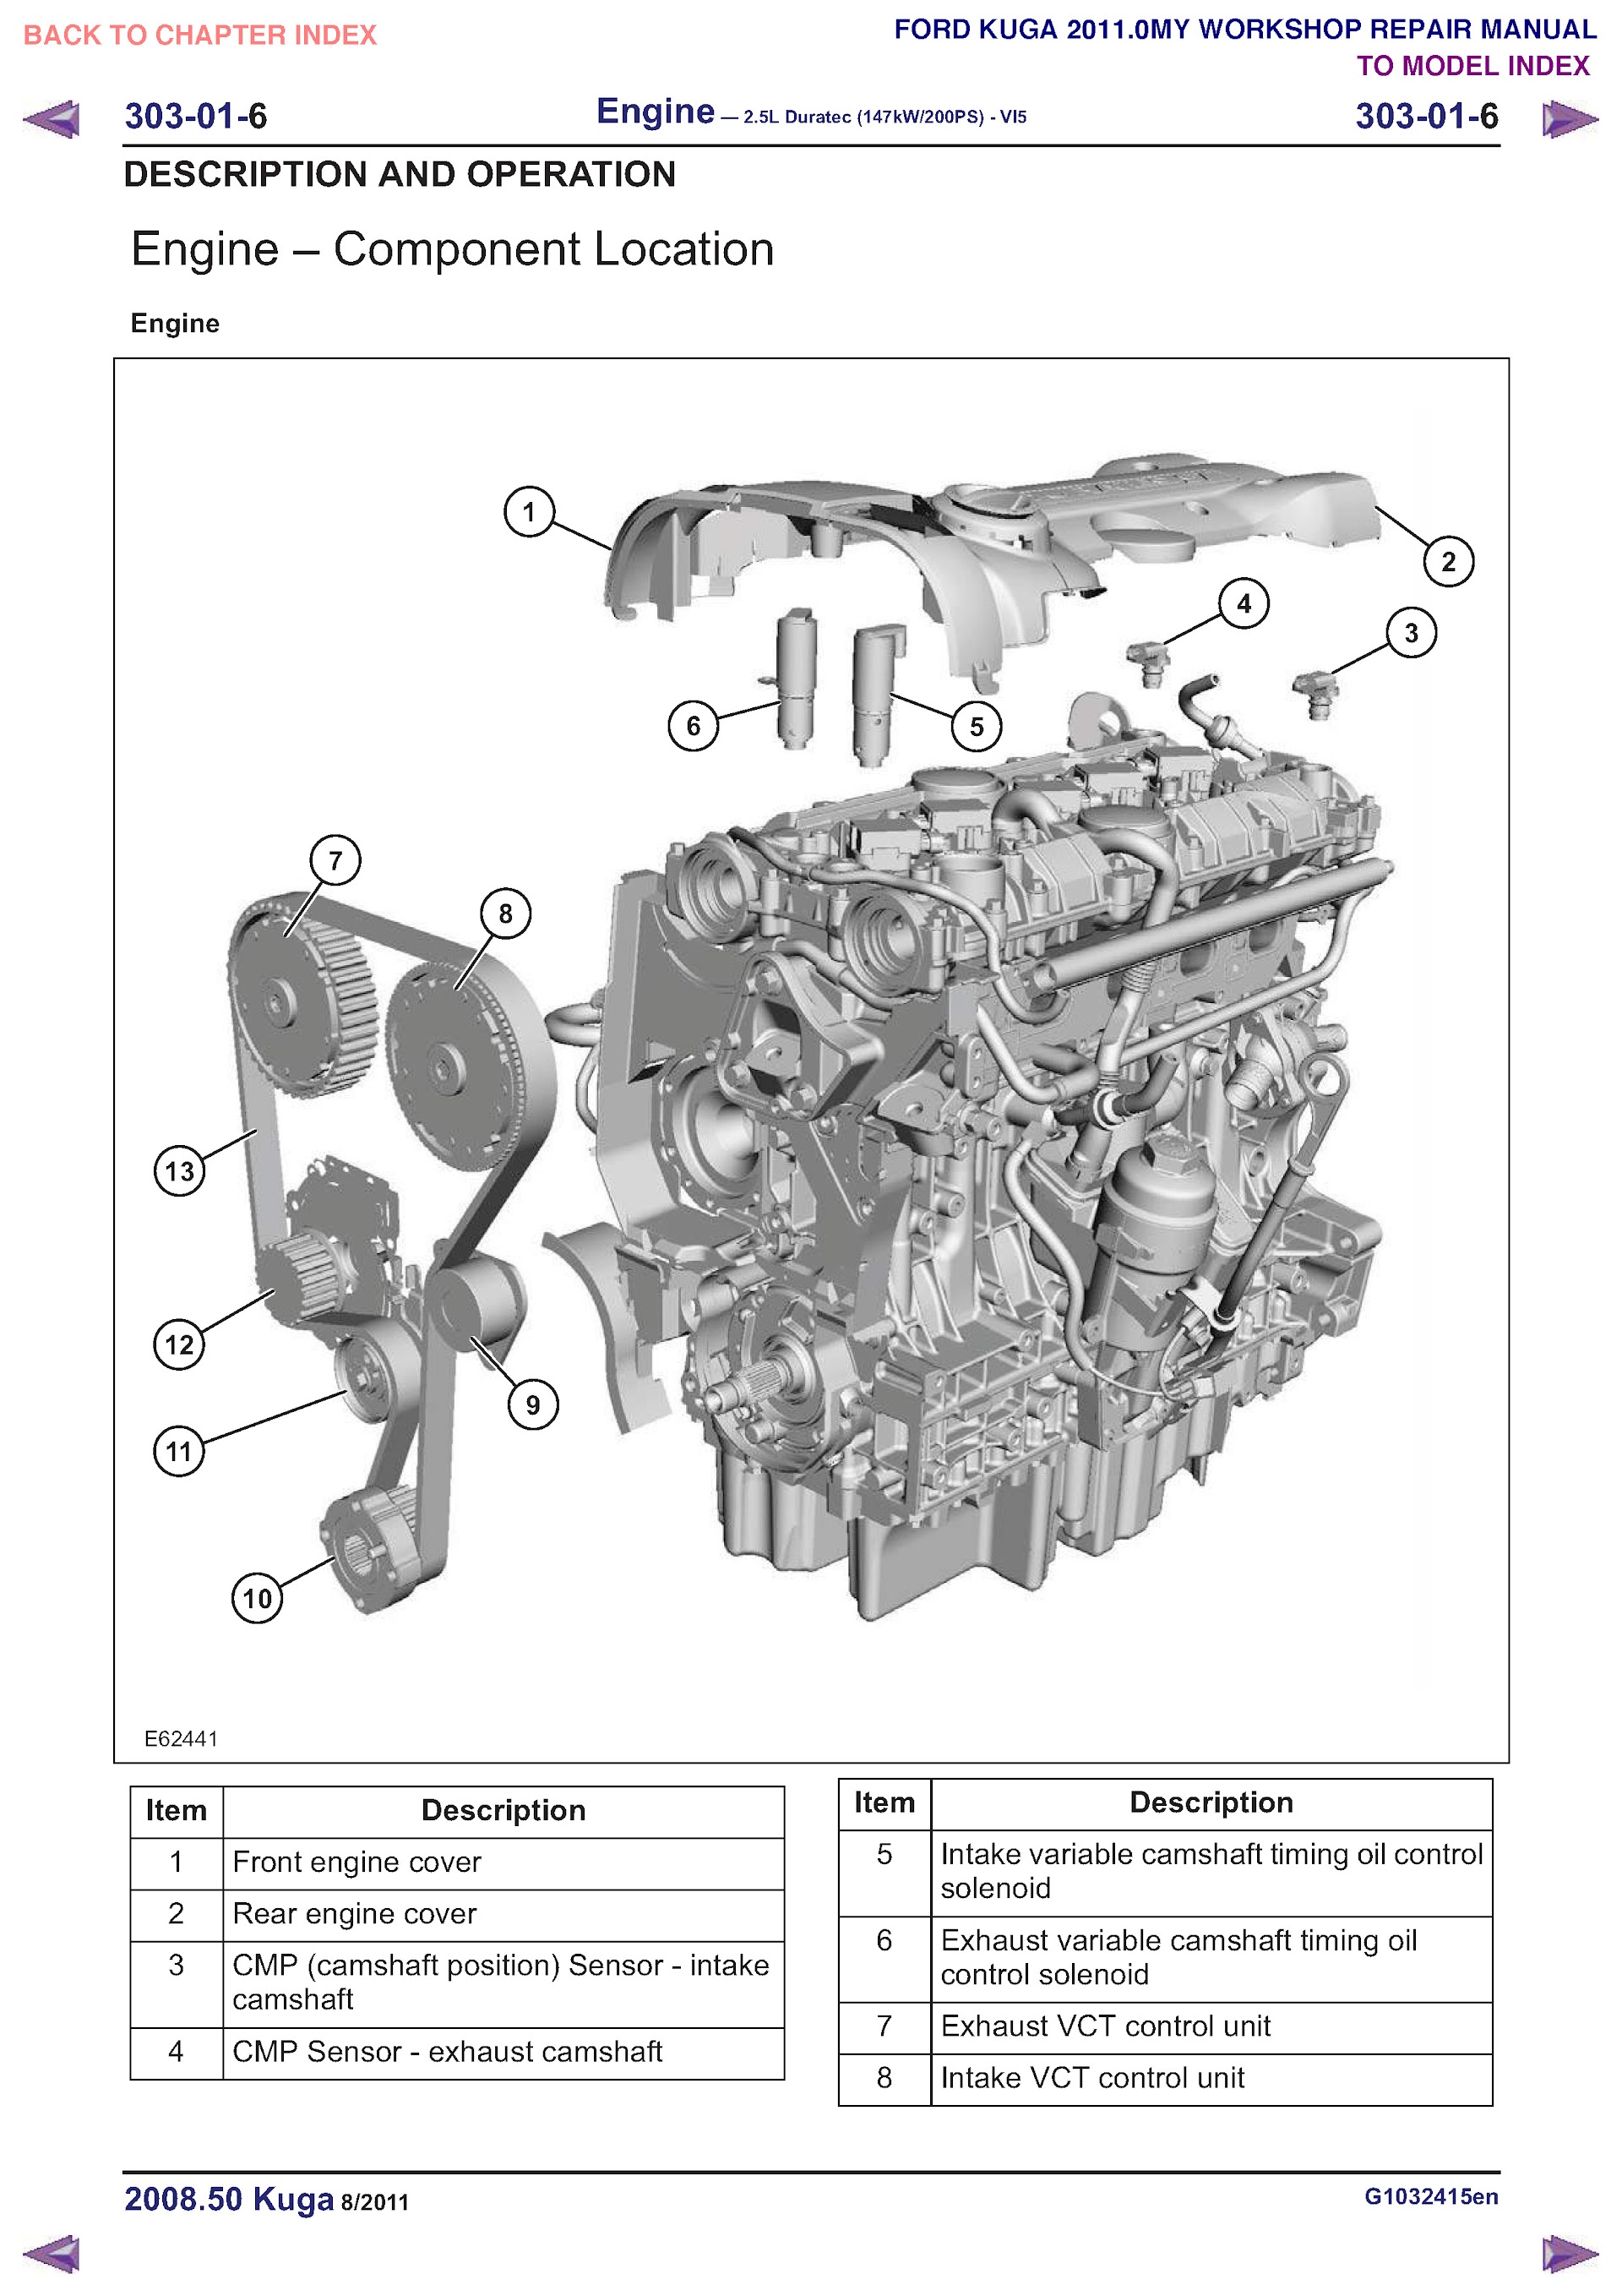 2014 Ford Kuga Repair Manual Engine component location